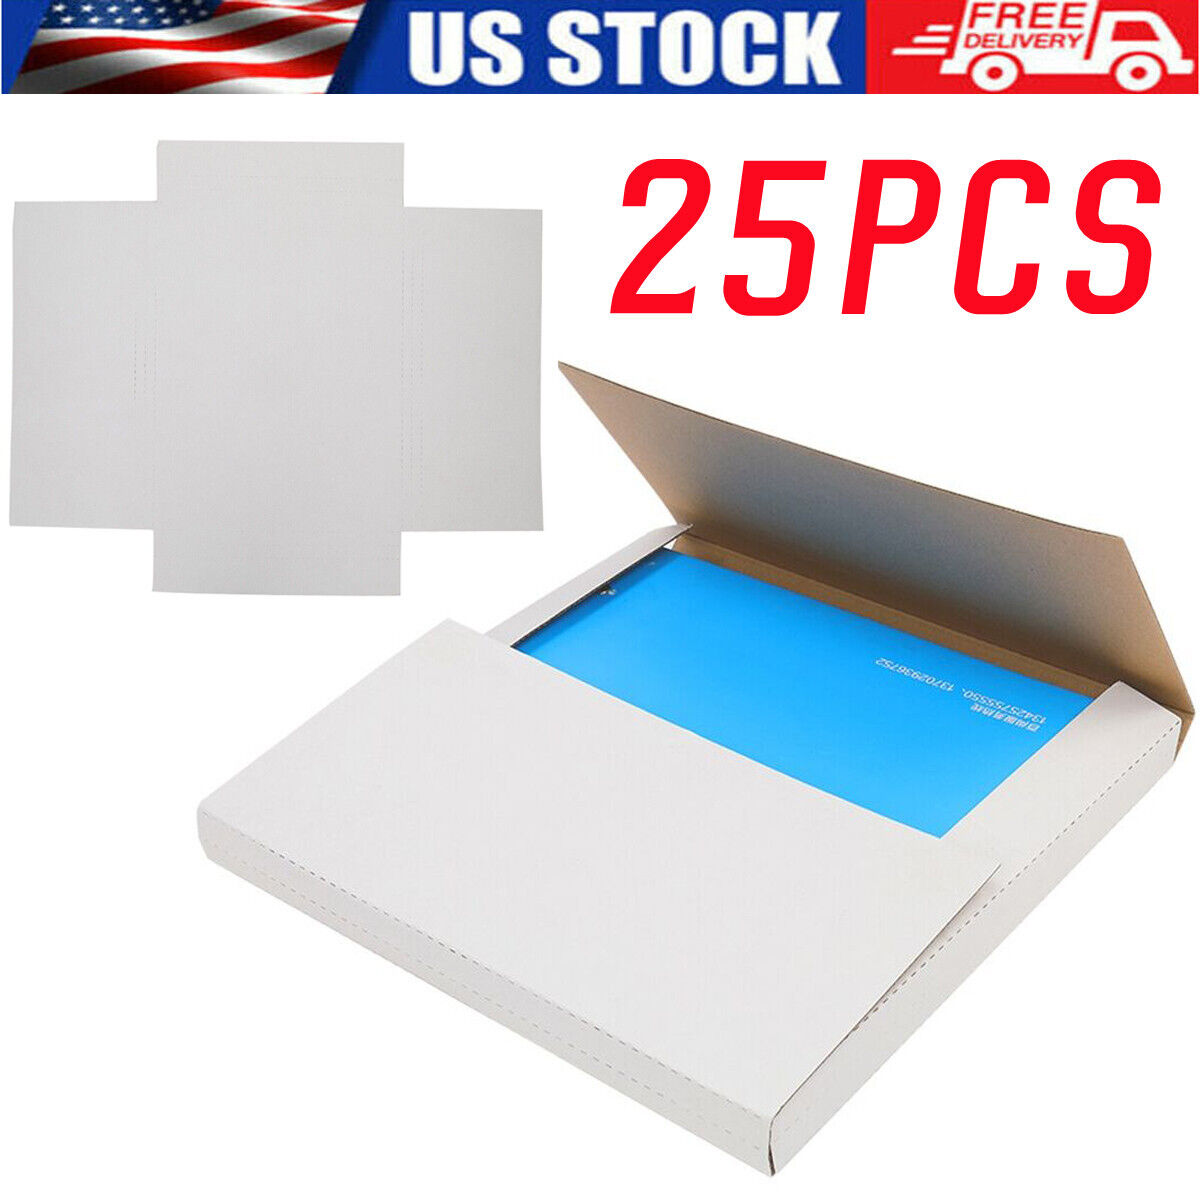 25PCS White Vinyl Record LP Shipping Mailer Boxes 12.5